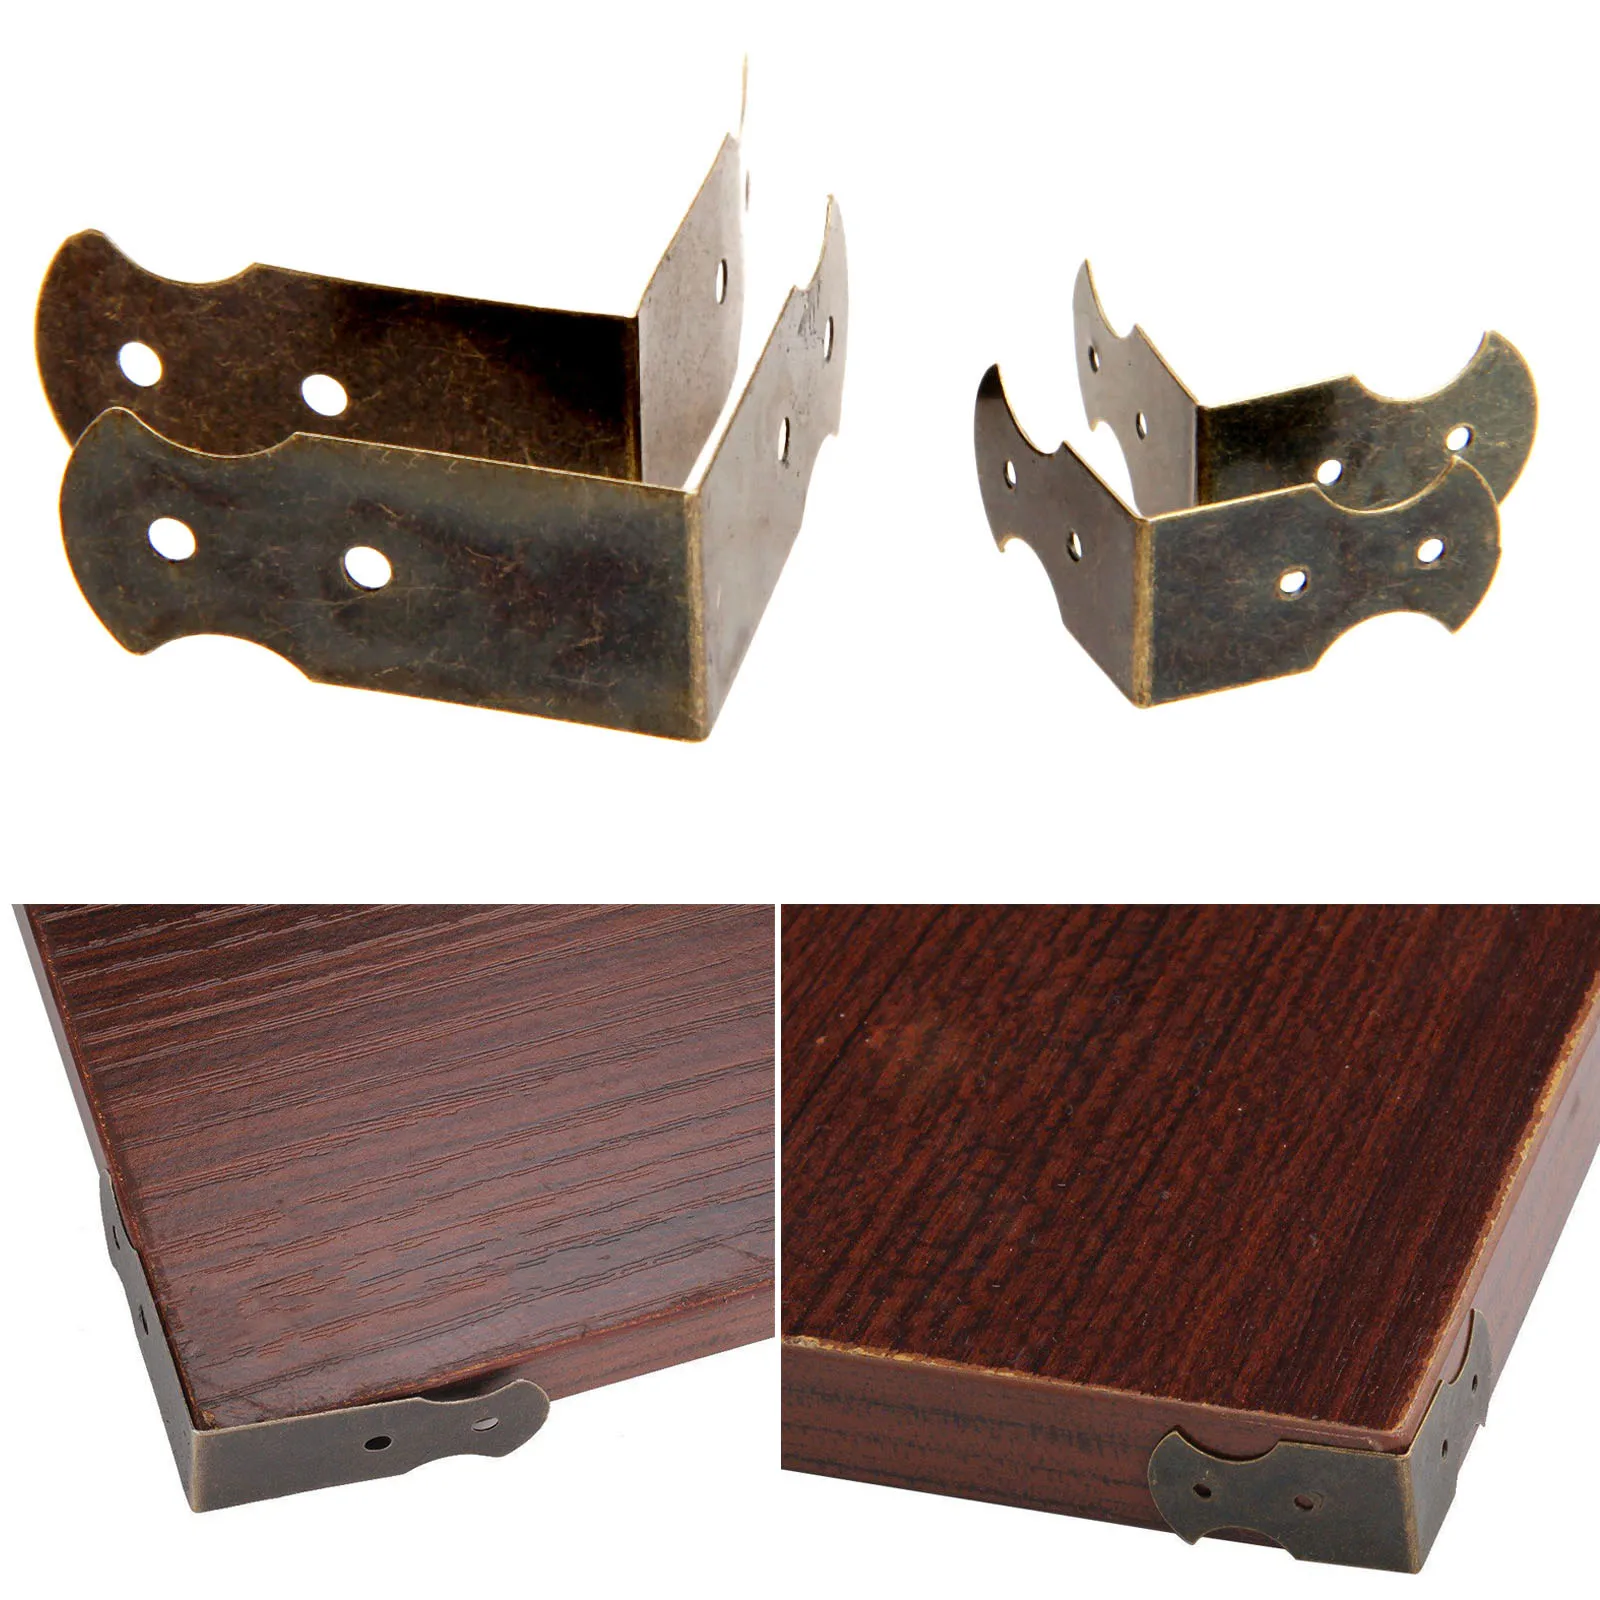 Details about   Furniture Accessory Table Corner Guard Box Retro Decorative Edge Protector 20Pcs 